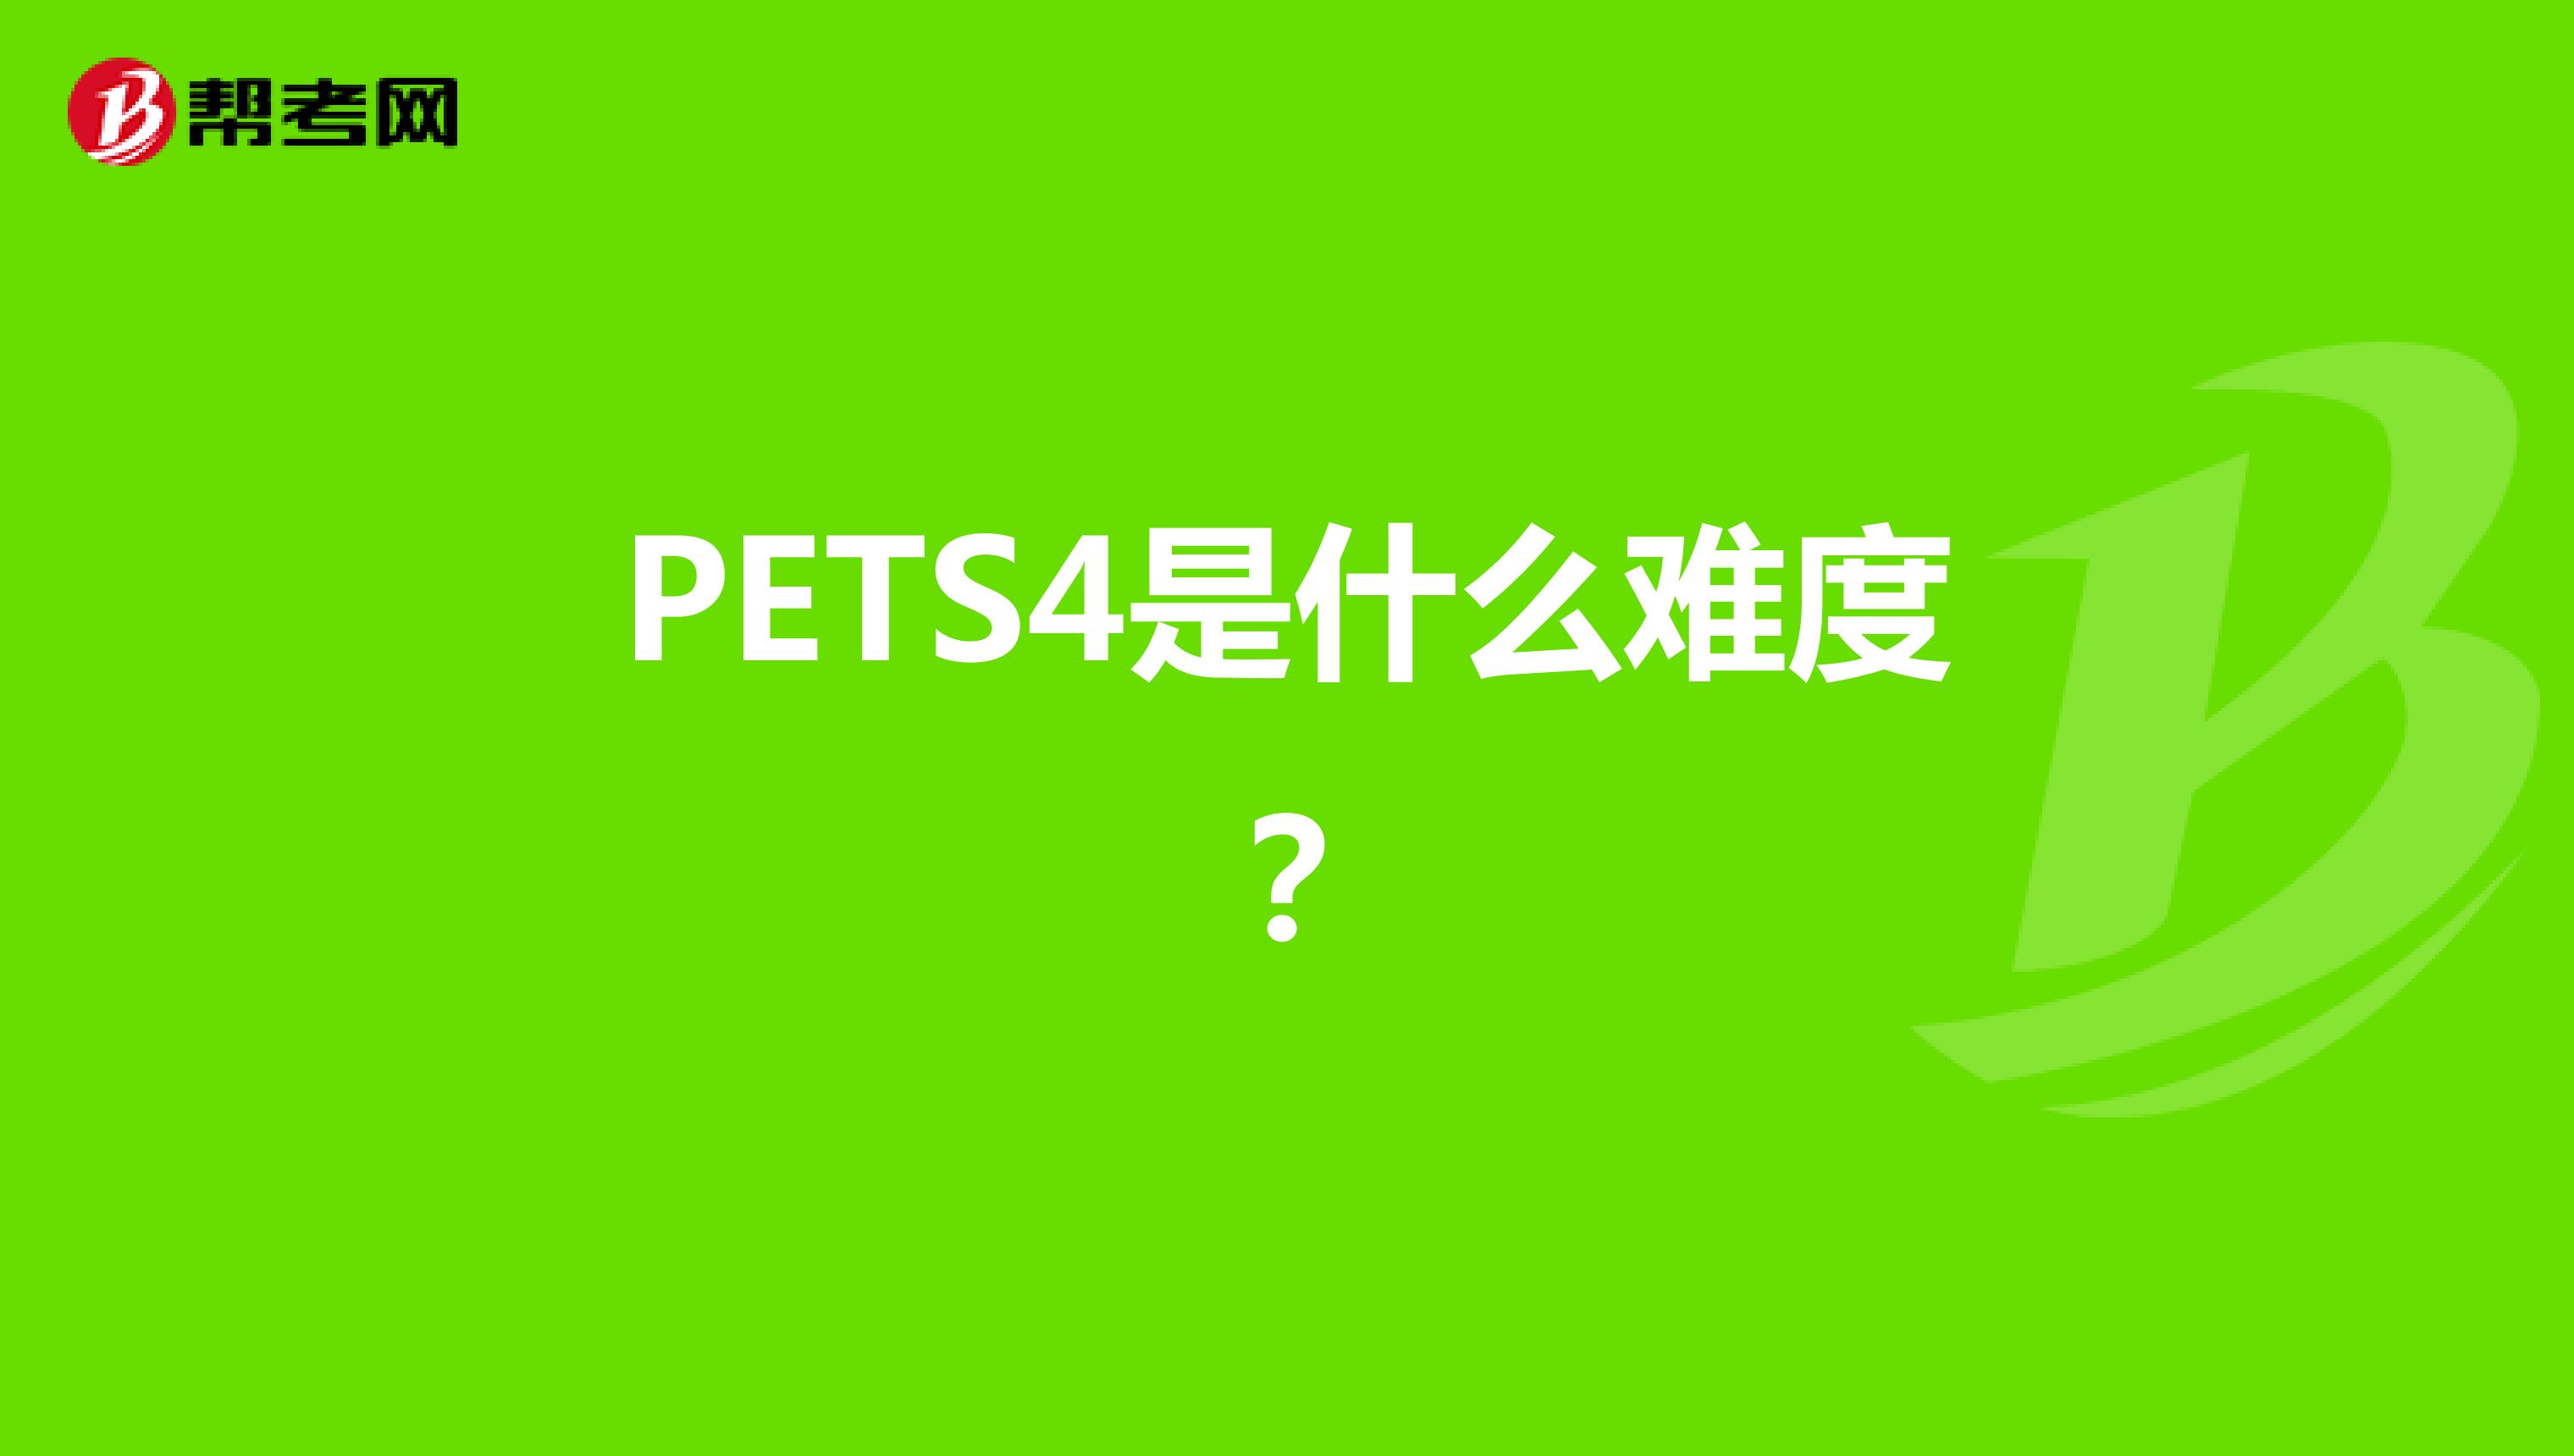 PETS4是什么难度？